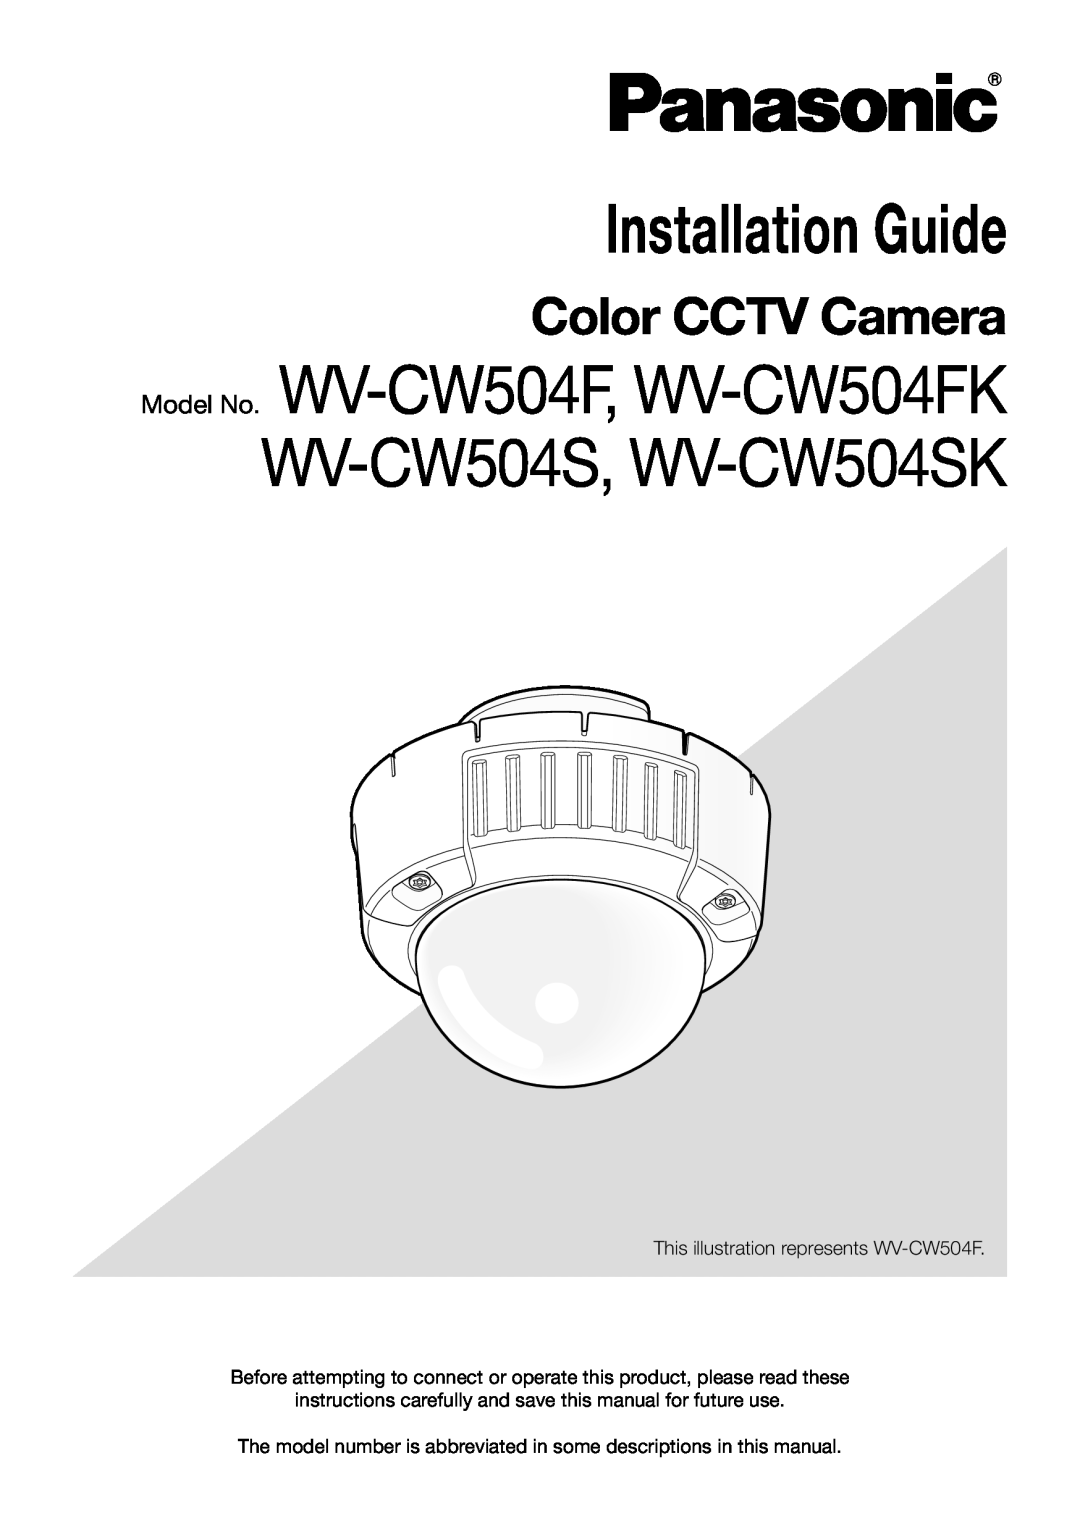 Panasonic WV-CW504FK, WV-CW504SK manual Operating Instructions, Color CCTV Camera 